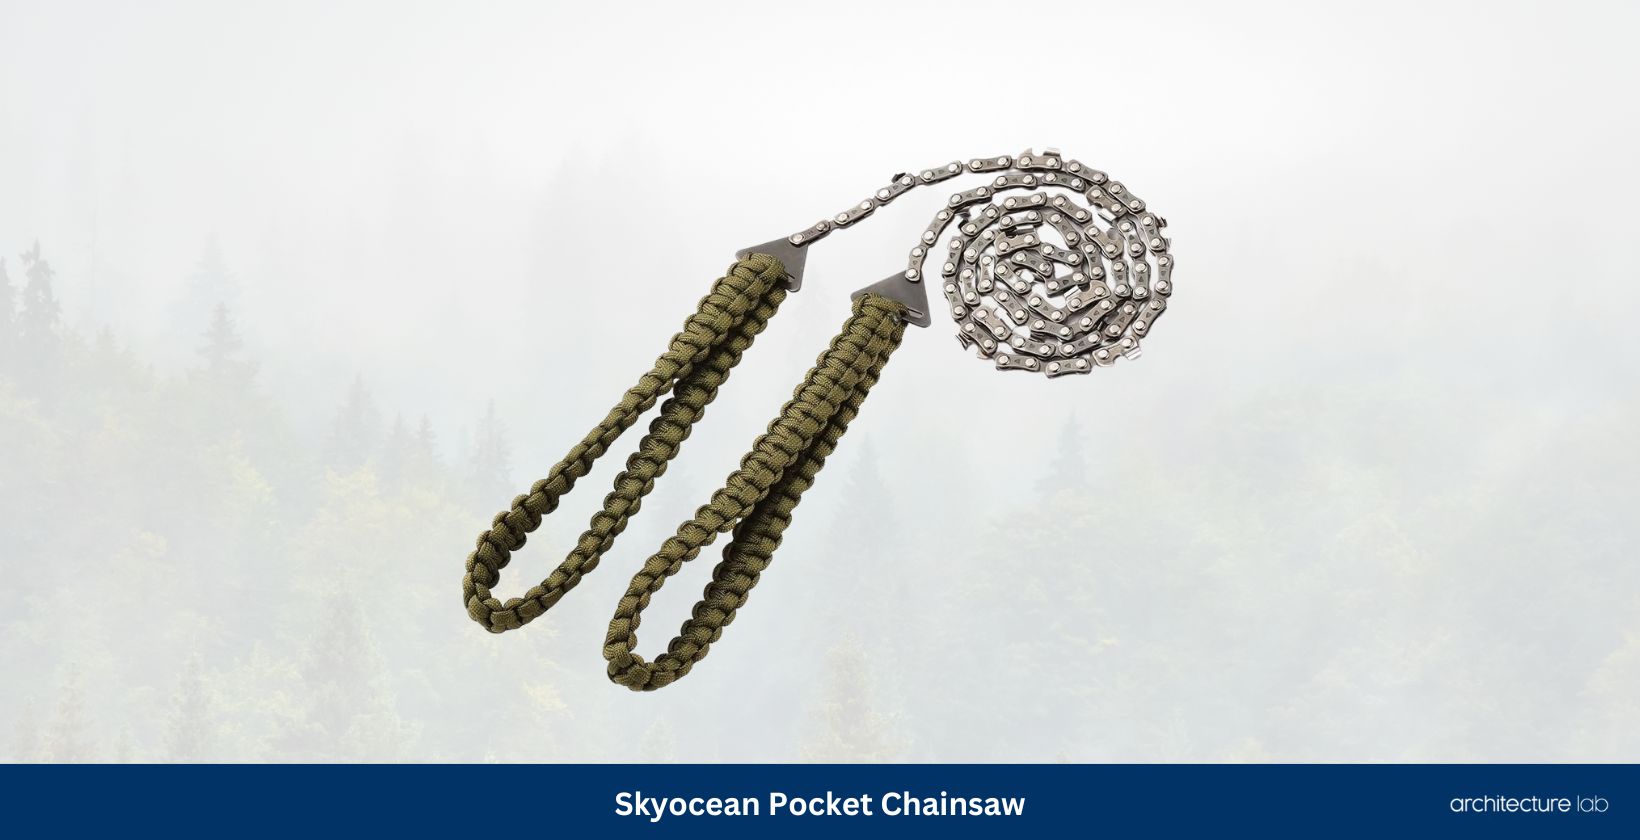 Skyocean pocket chainsaw